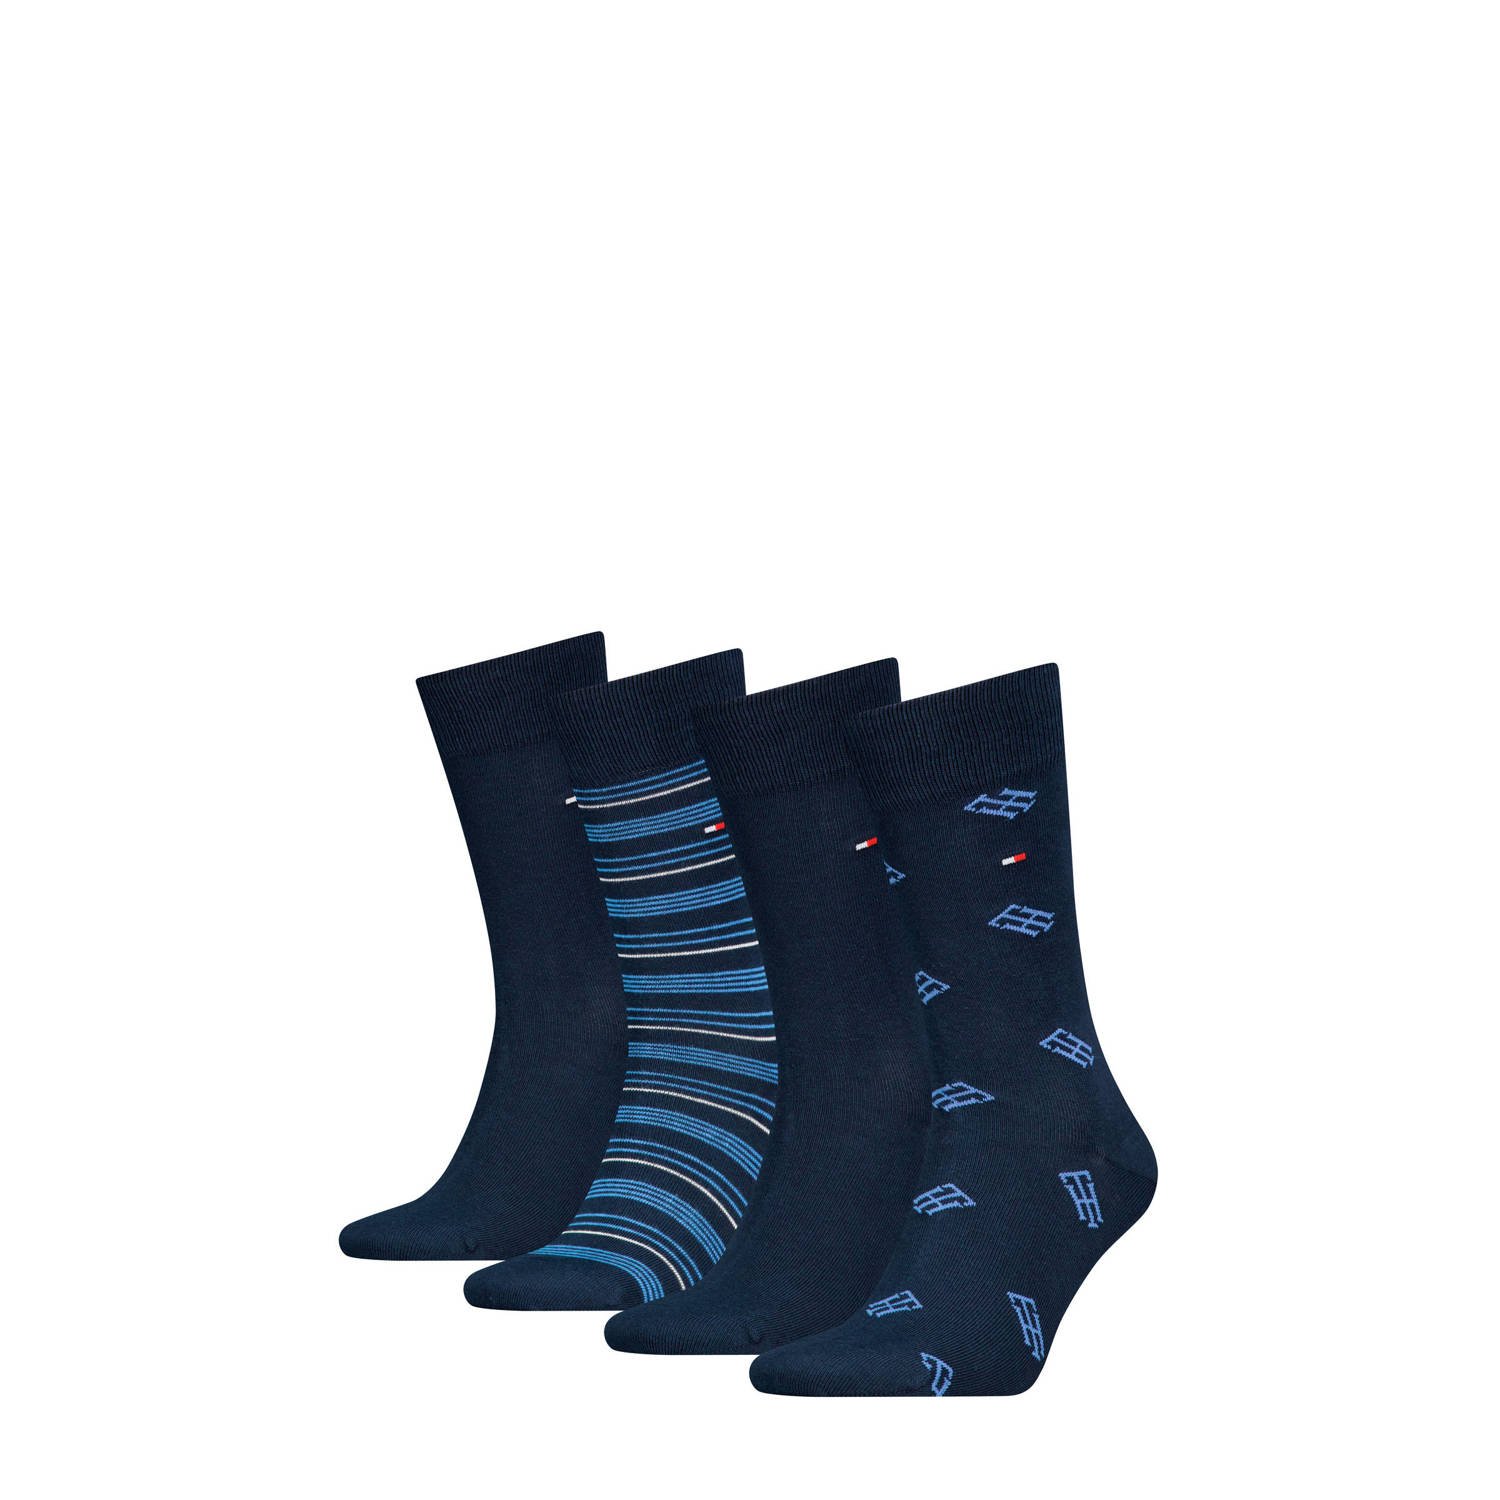 Tommy Hilfiger giftbox sokken set van 4 donkerblauw